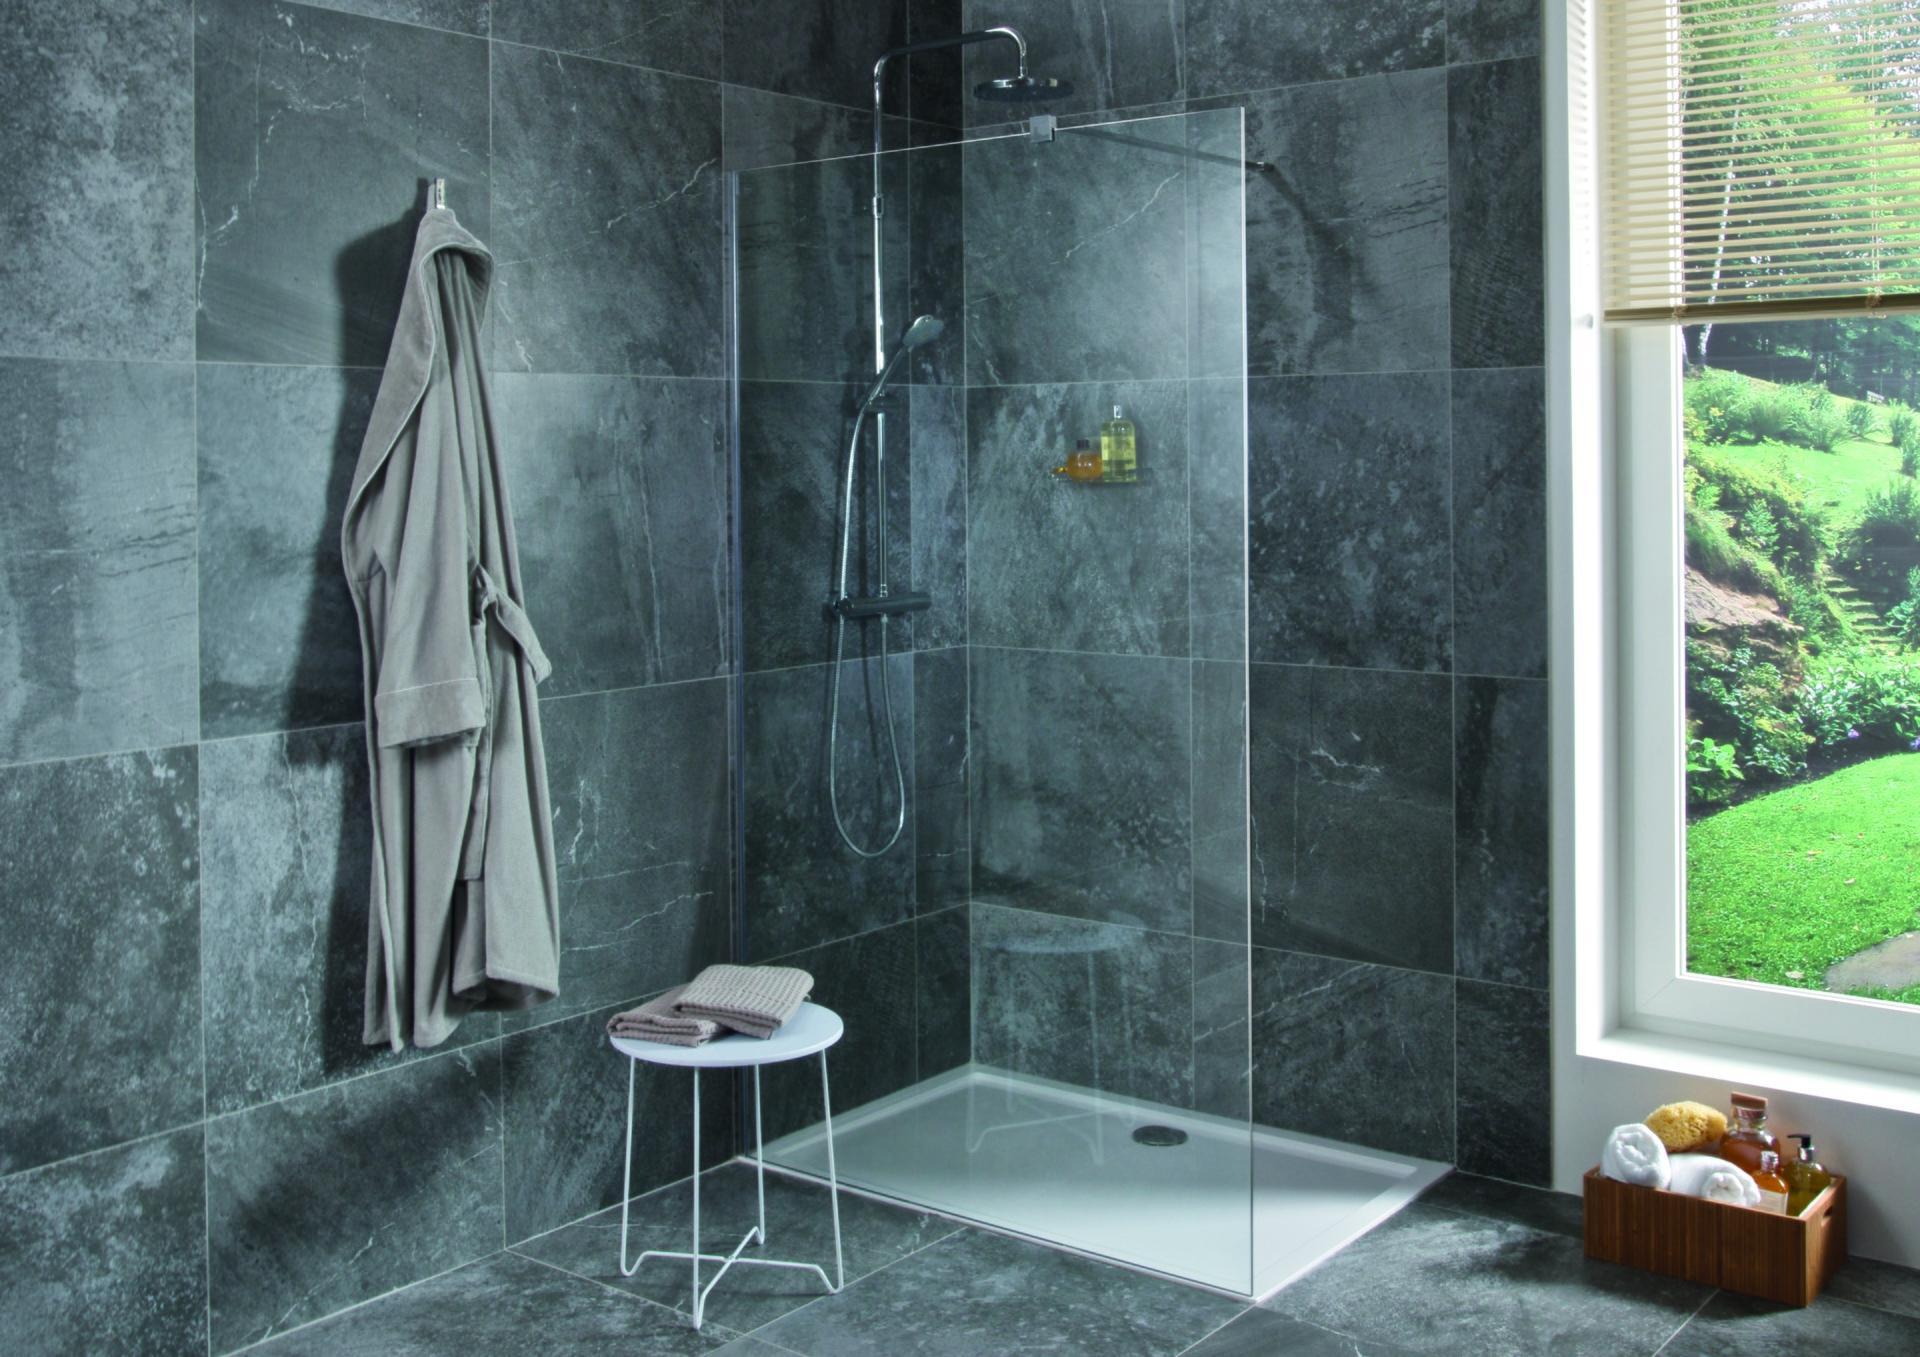 Üvegfalú zuhanyfülke - fürdő / WC ötlet, modern stílusban